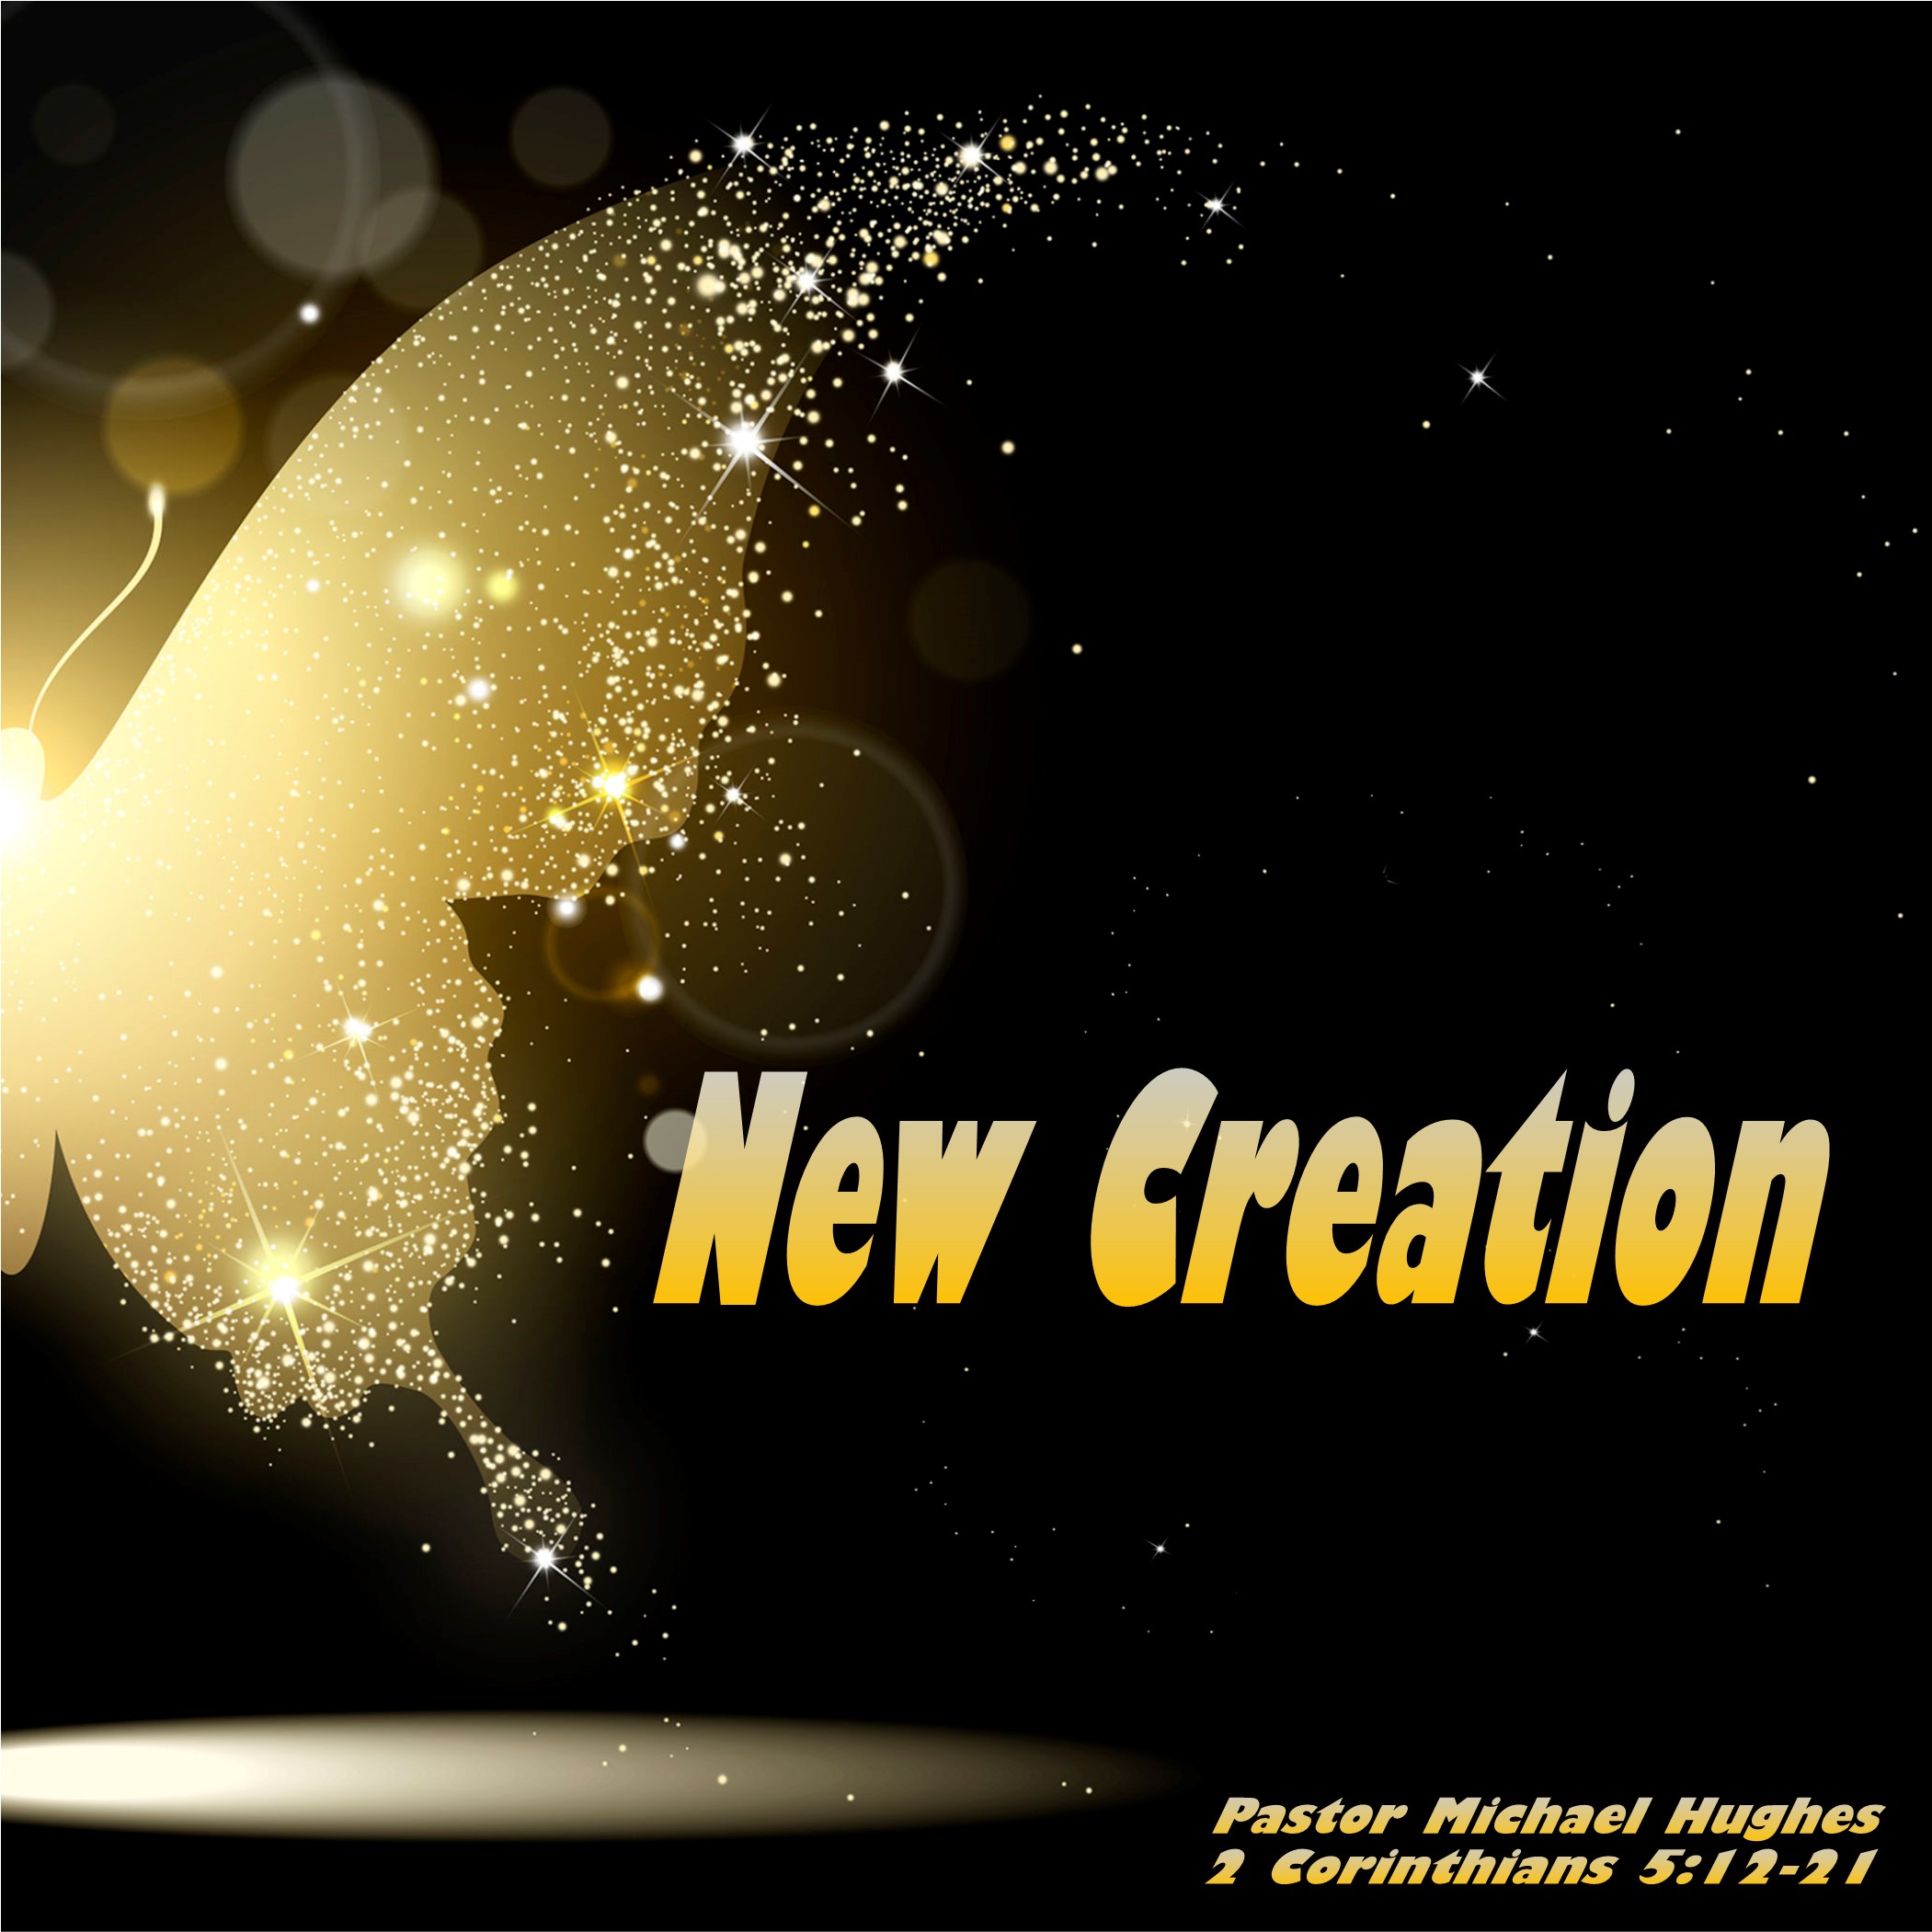 2 Corinthians 5:12-21 ”New Creation” w/ Pastor Michael Hughes